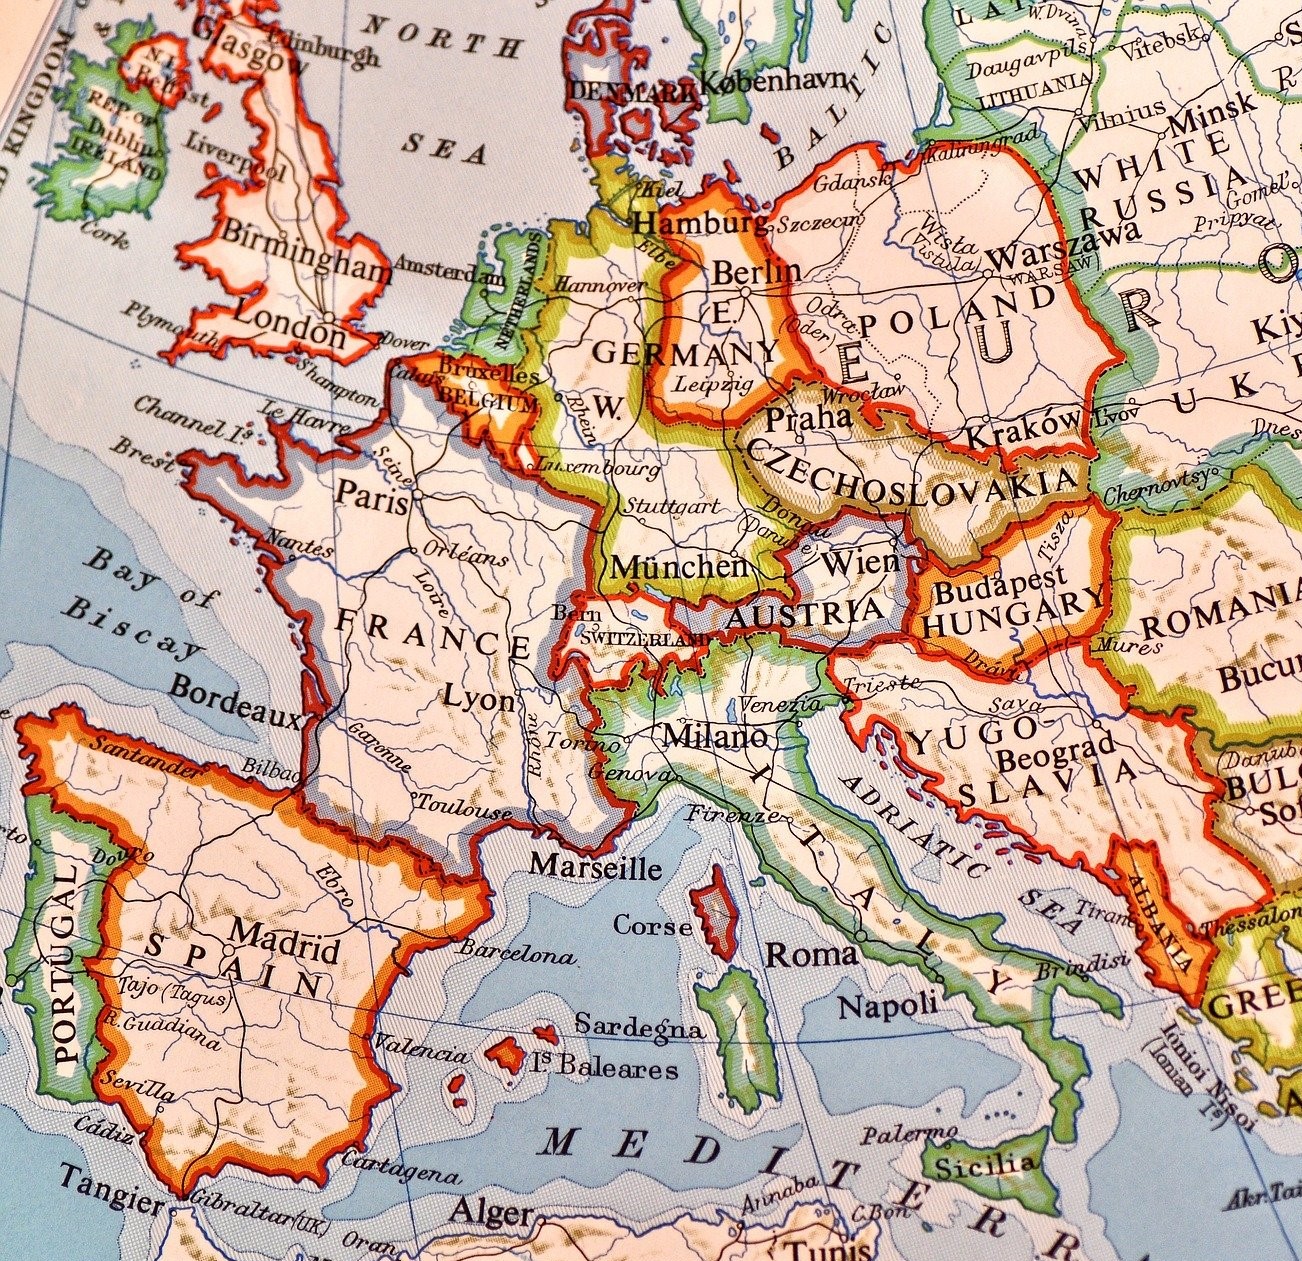 A globe map of Europe